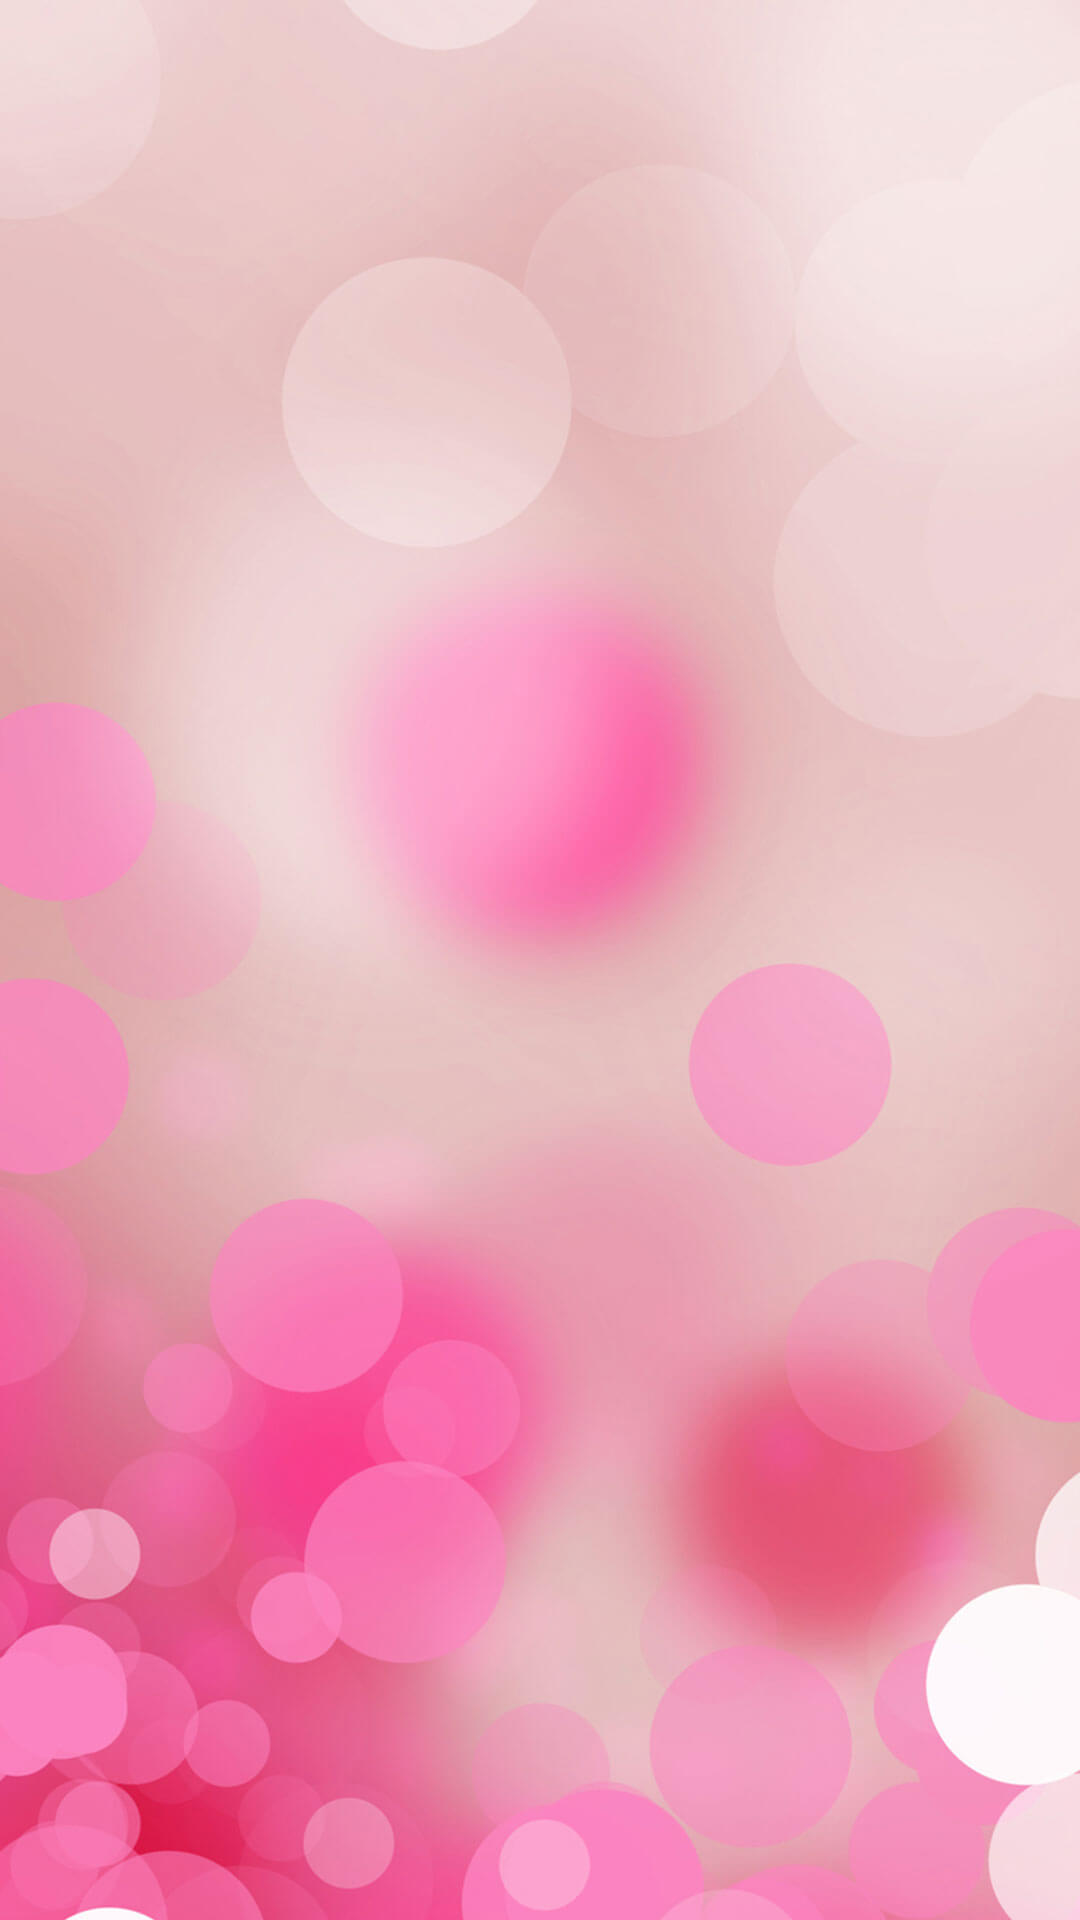 Pink wallpaper iphone